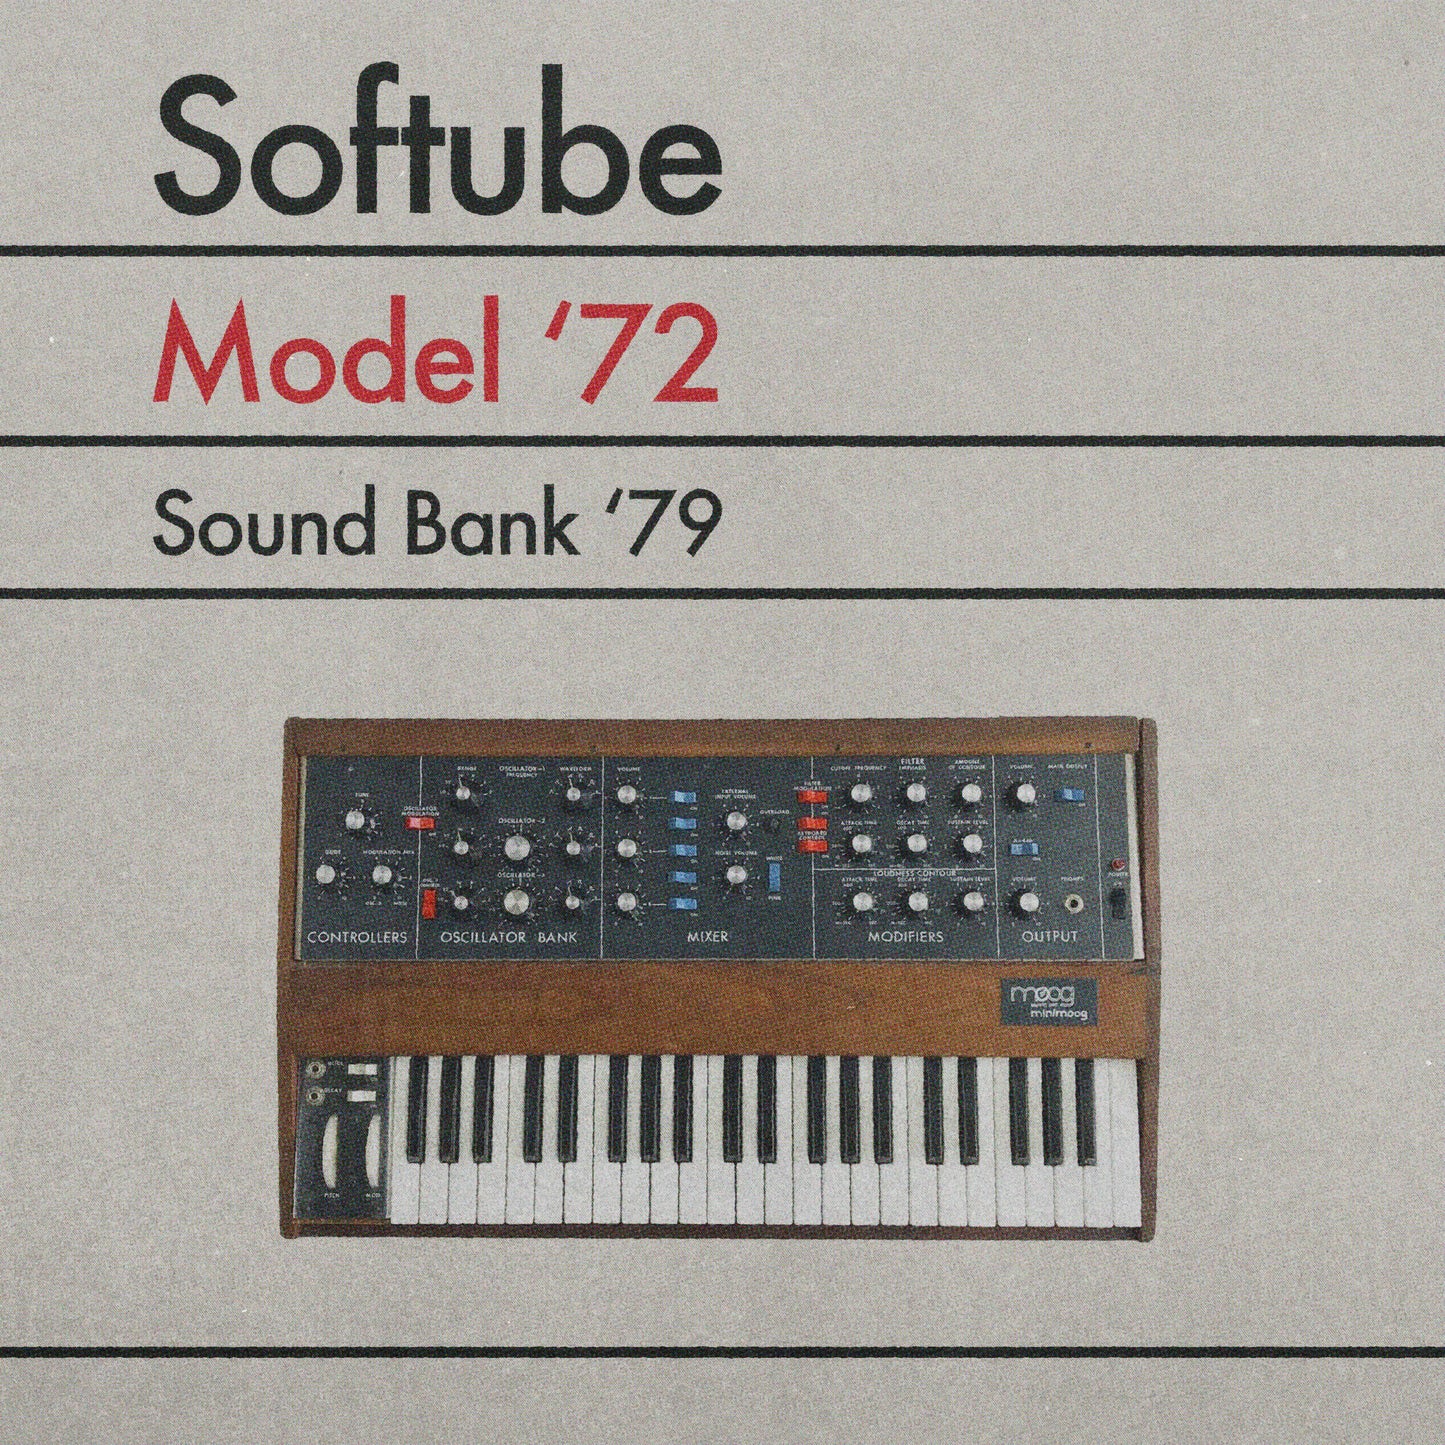 Softube Model '72 - Sound Bank '79